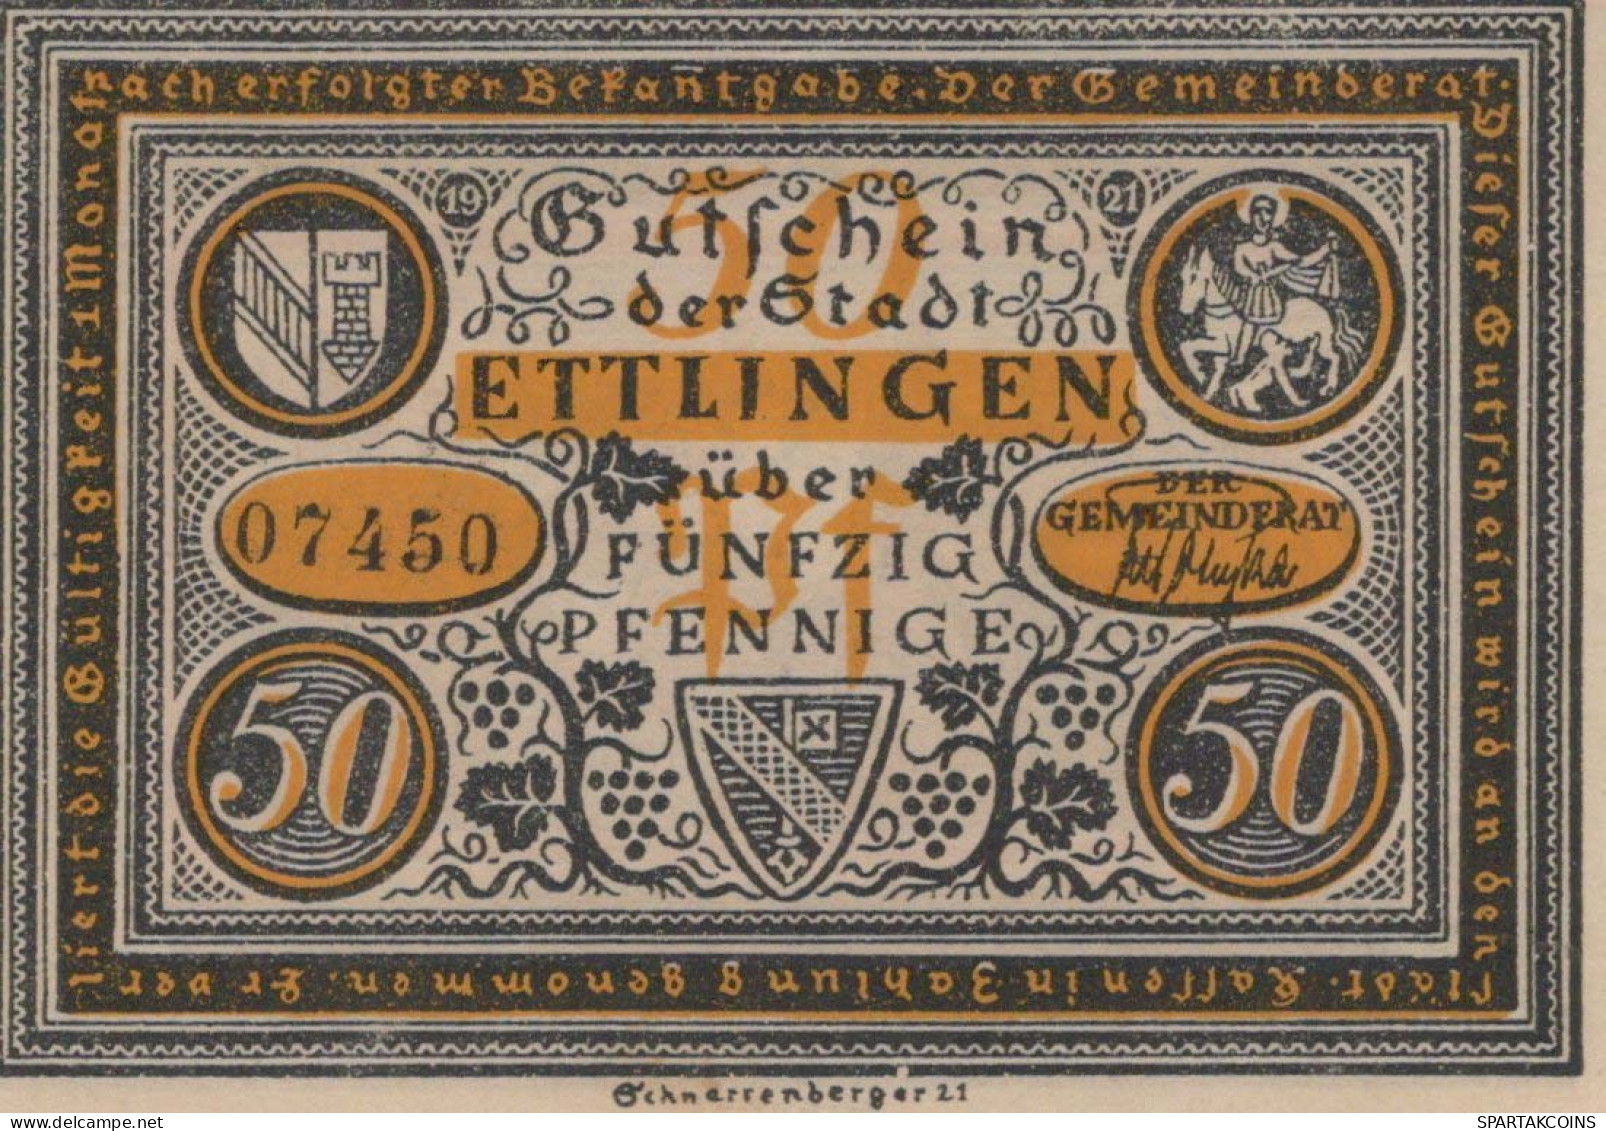 50 PFENNIG 1921 Stadt ETTLINGEN Baden UNC DEUTSCHLAND Notgeld Banknote #PB371 - [11] Local Banknote Issues